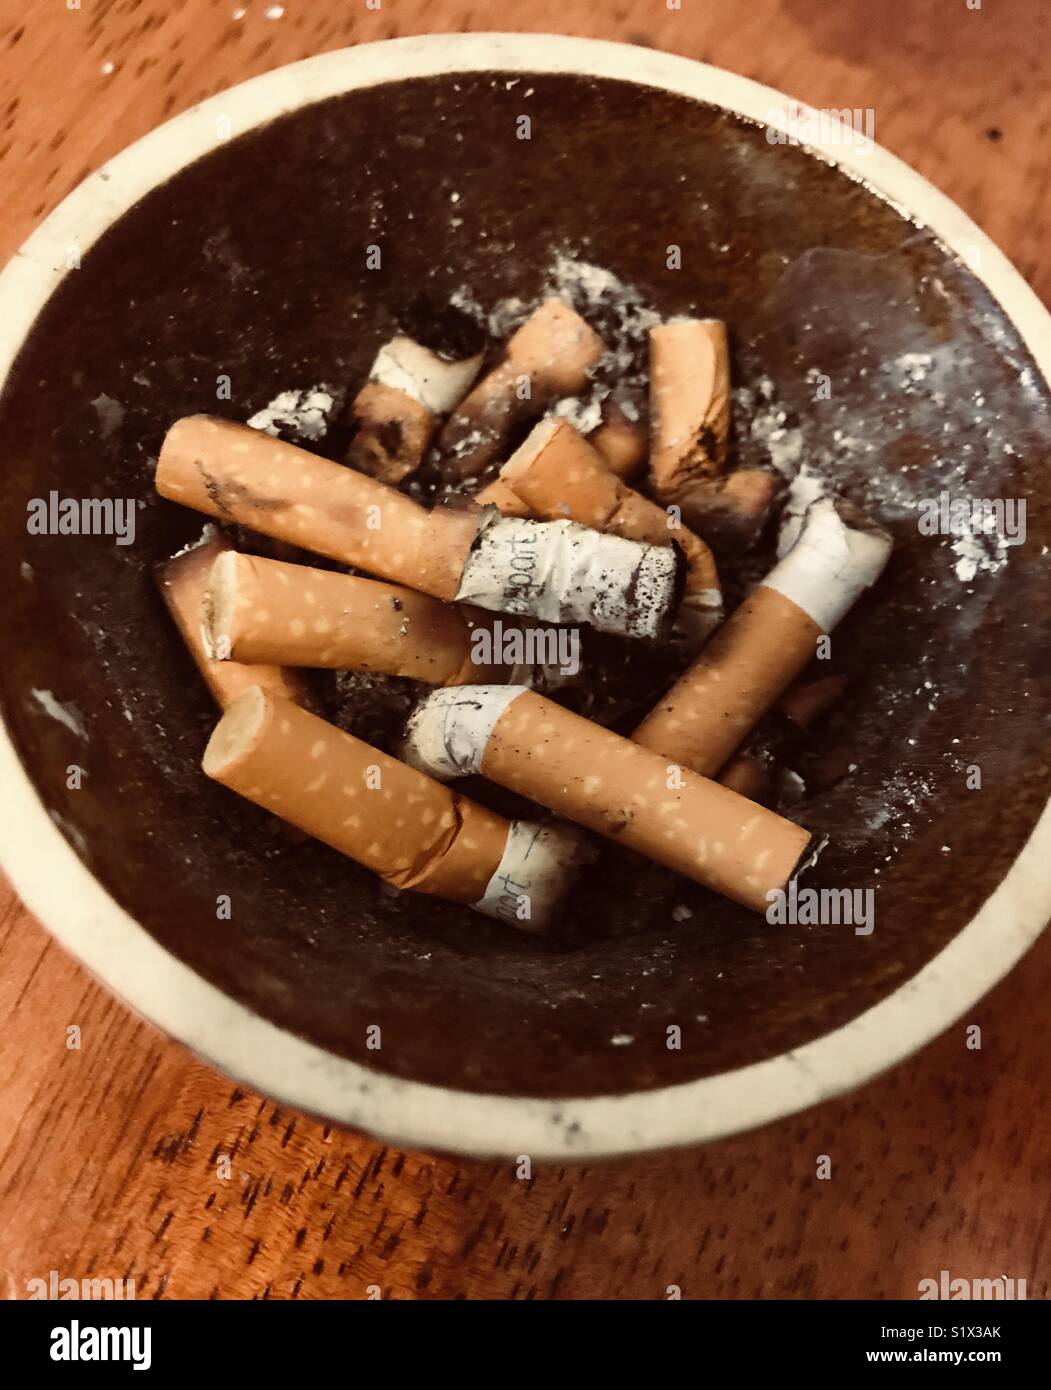 Cigarettes, January 2018 Stock Photo - Alamy